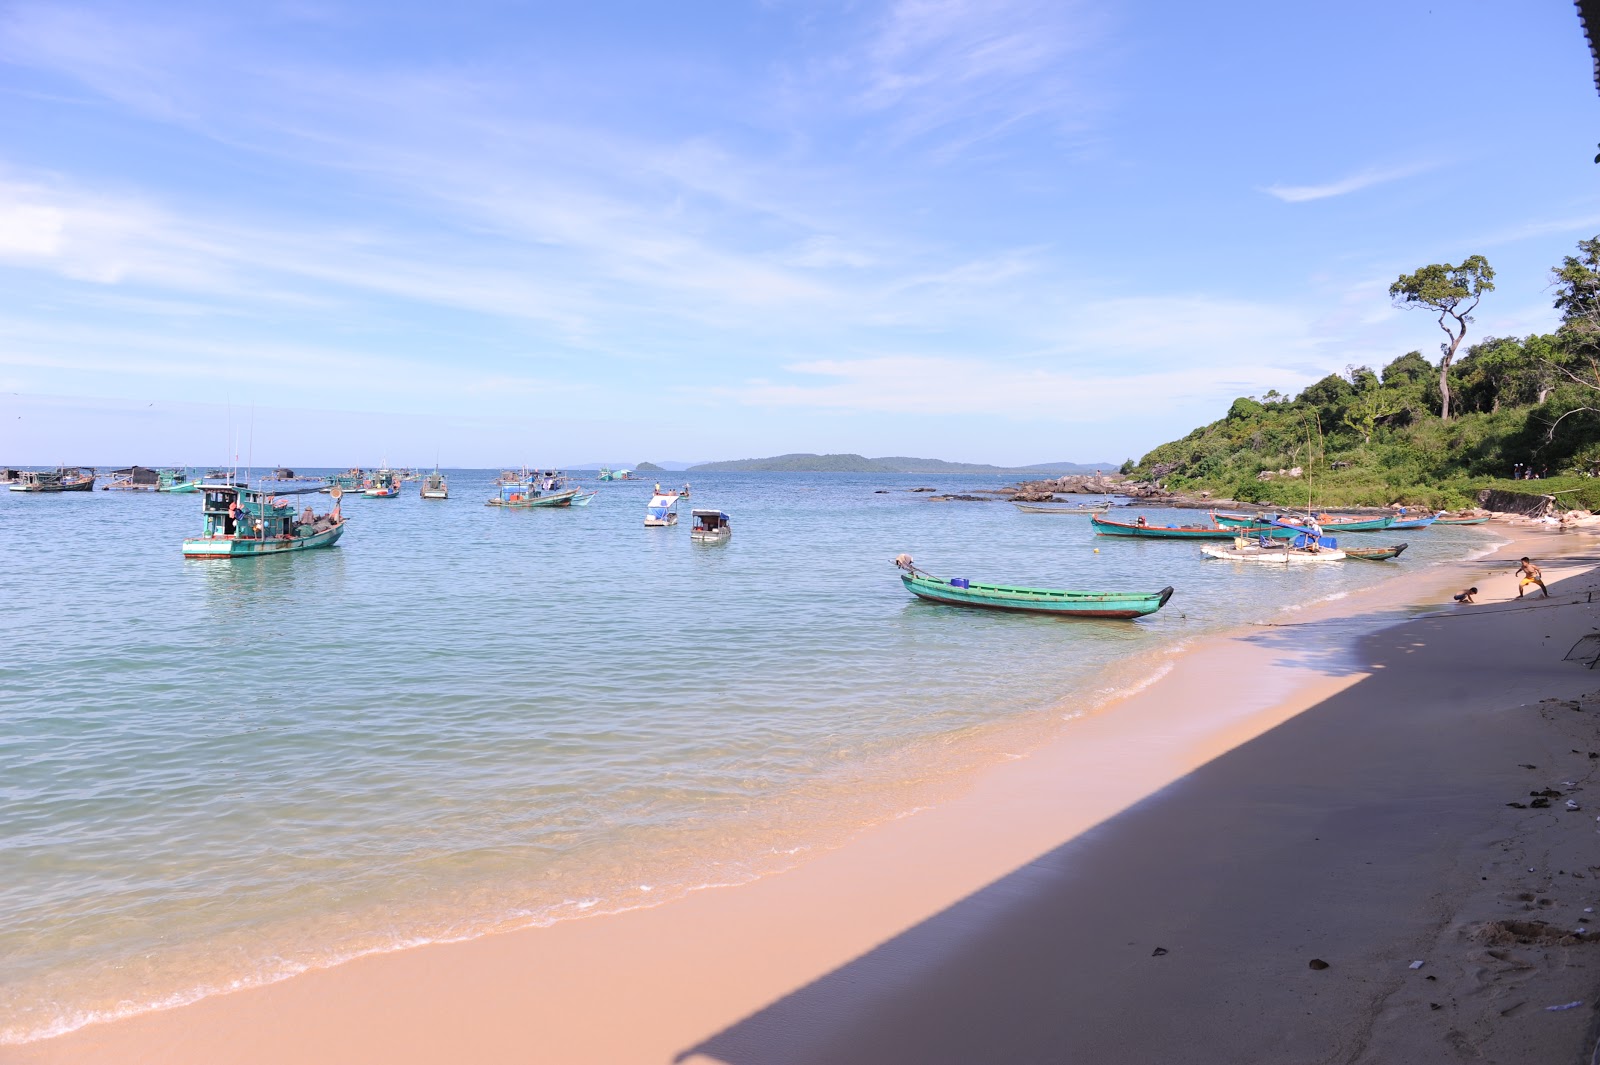 Fotografie cu Ganh Dau Beach - locul popular printre cunoscătorii de relaxare